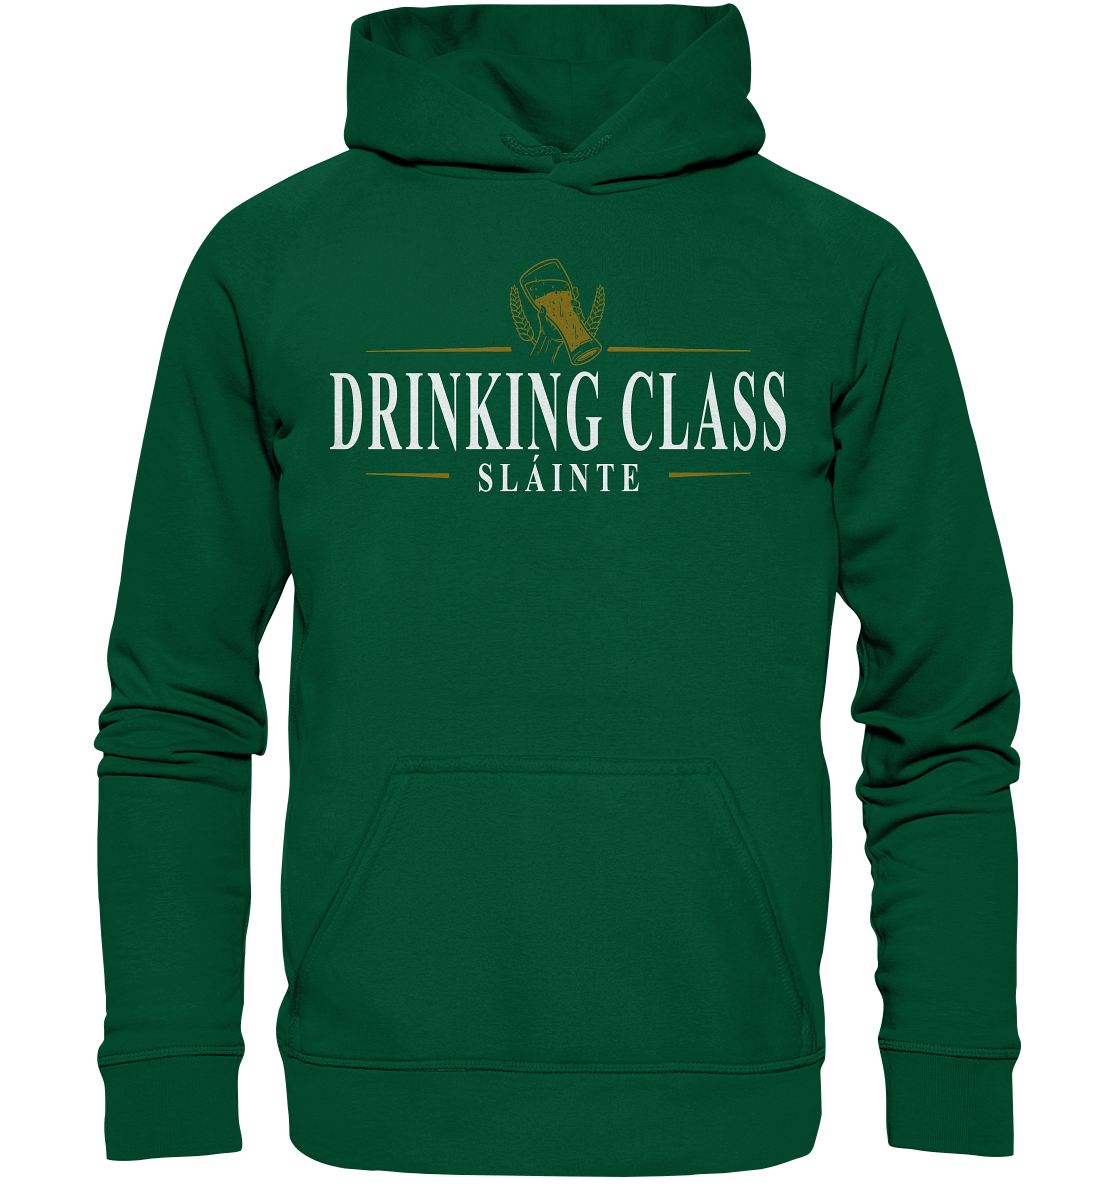 Drinking Class "Sláinte" - Basic Unisex Hoodie